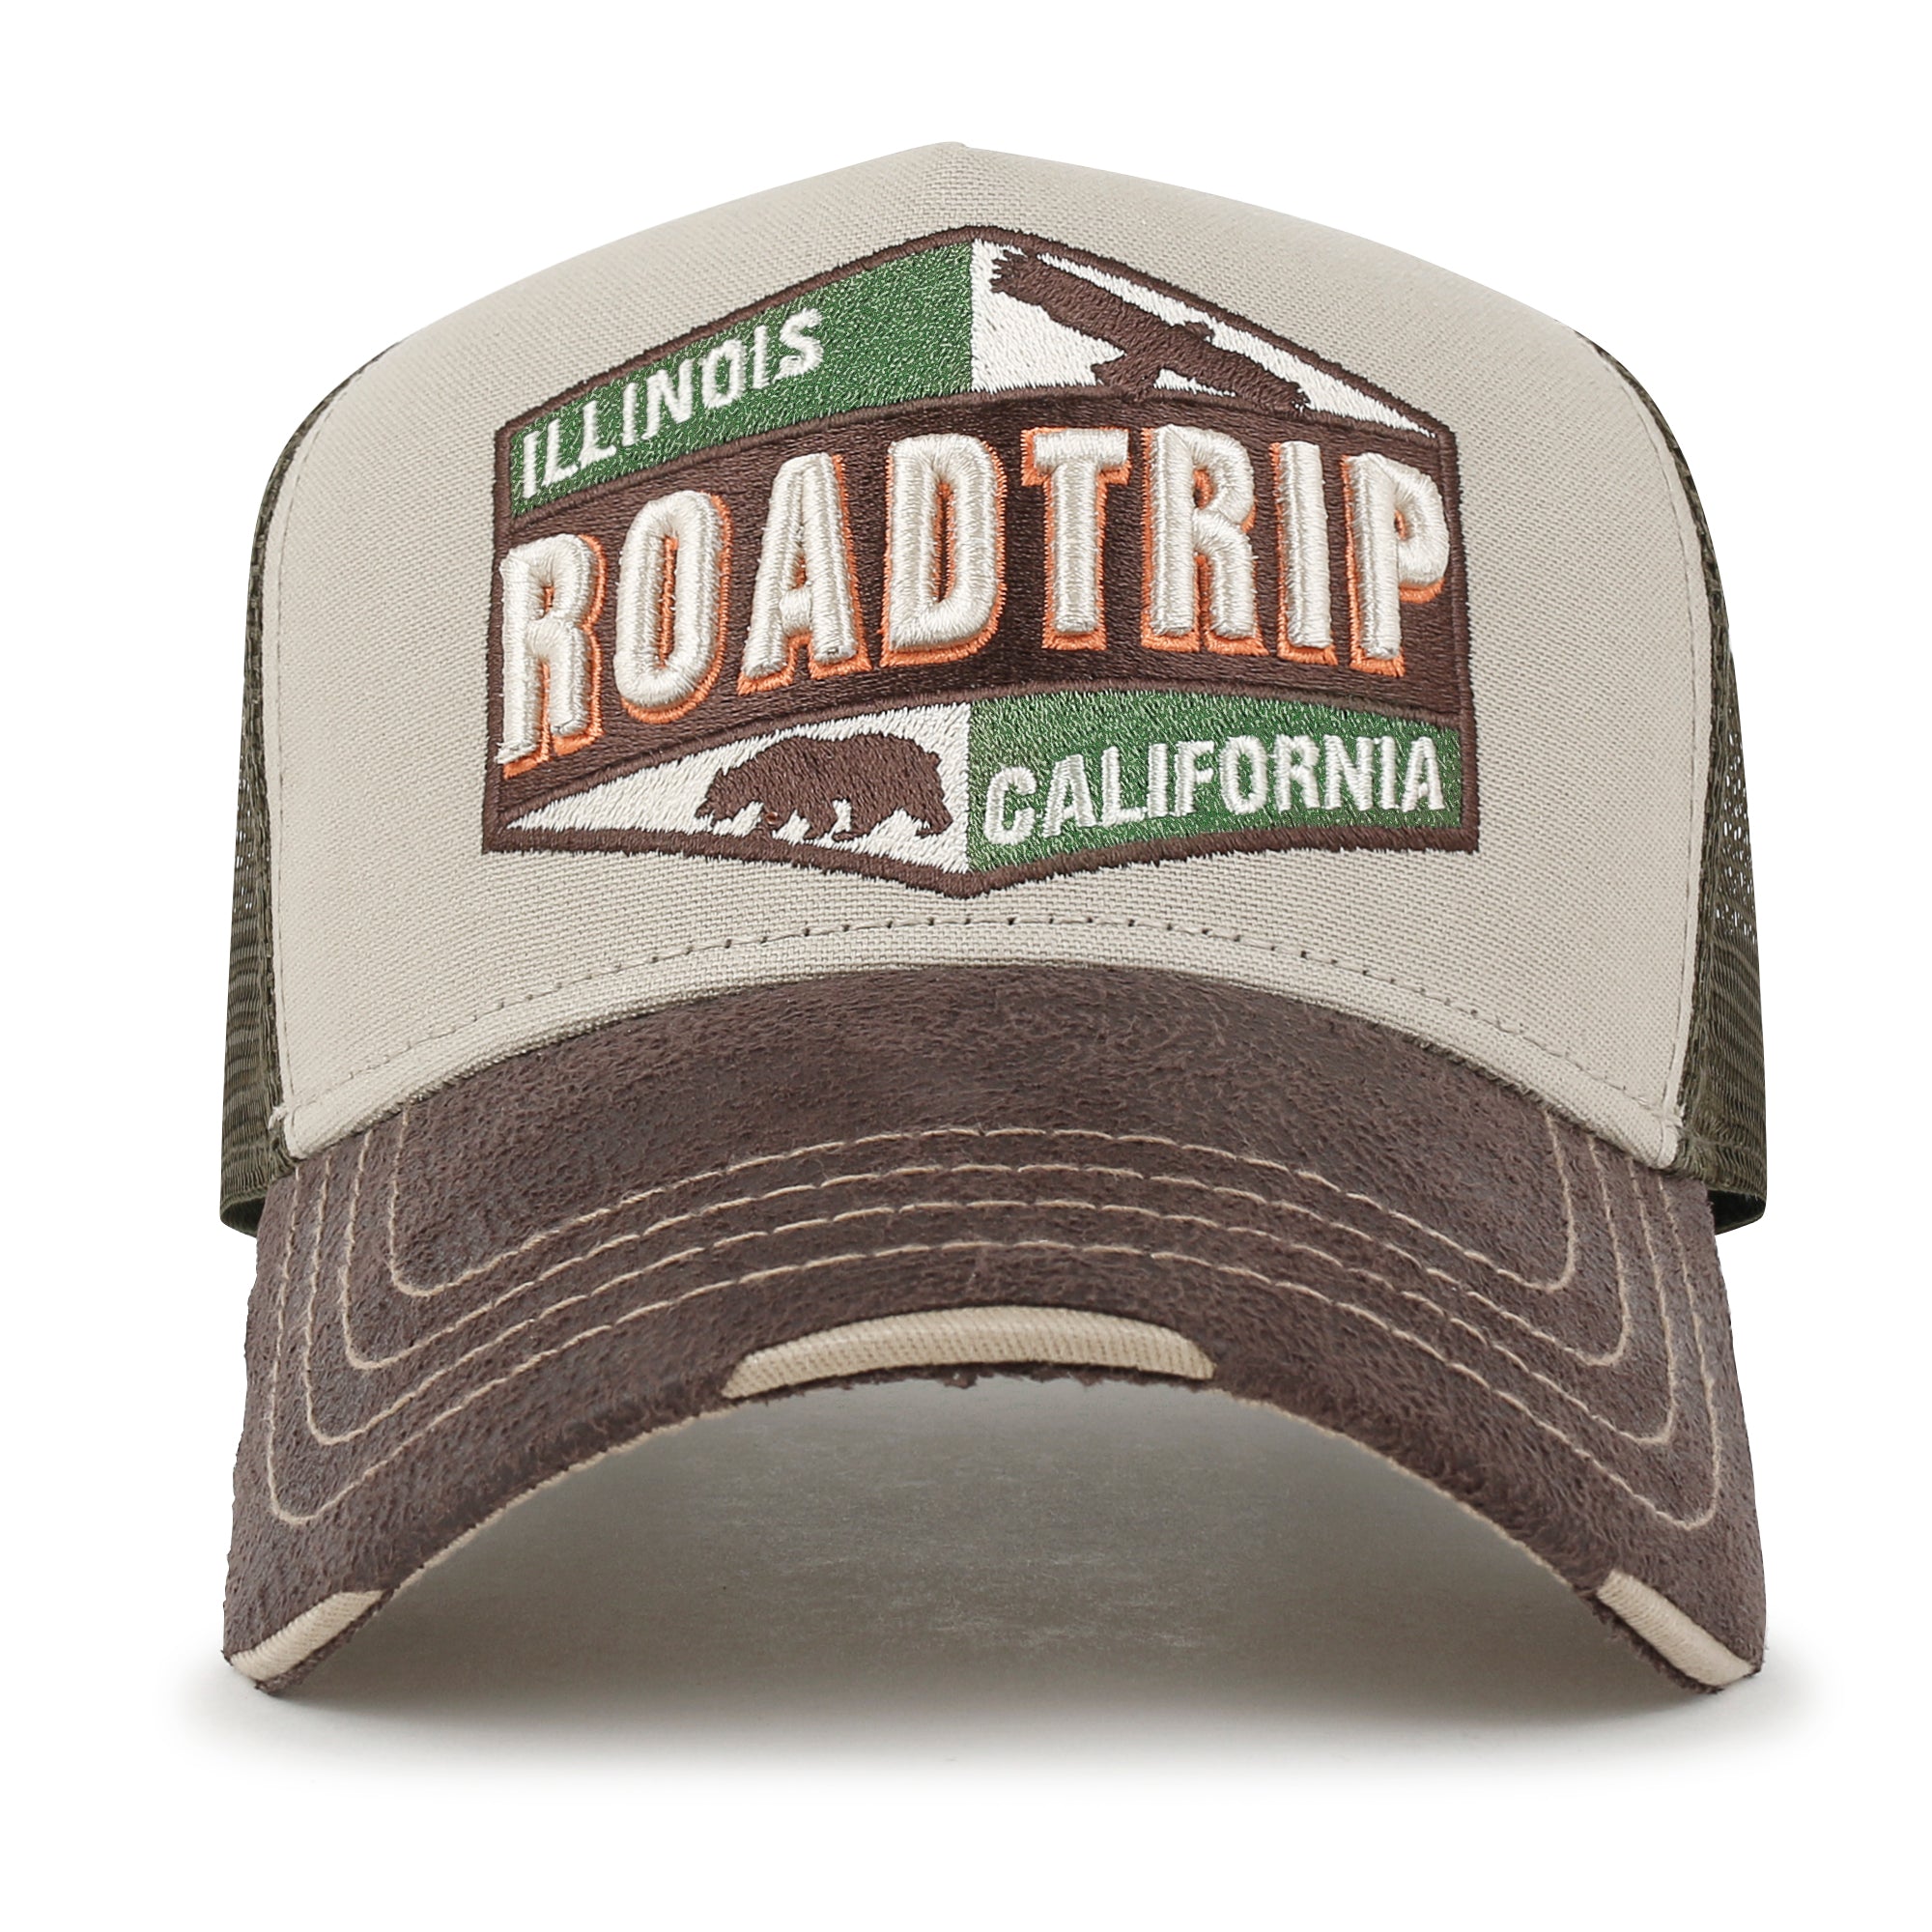 ililily Premium ROAD TRIP Embroidery Hexagon Patch Hat Vintage Basebal